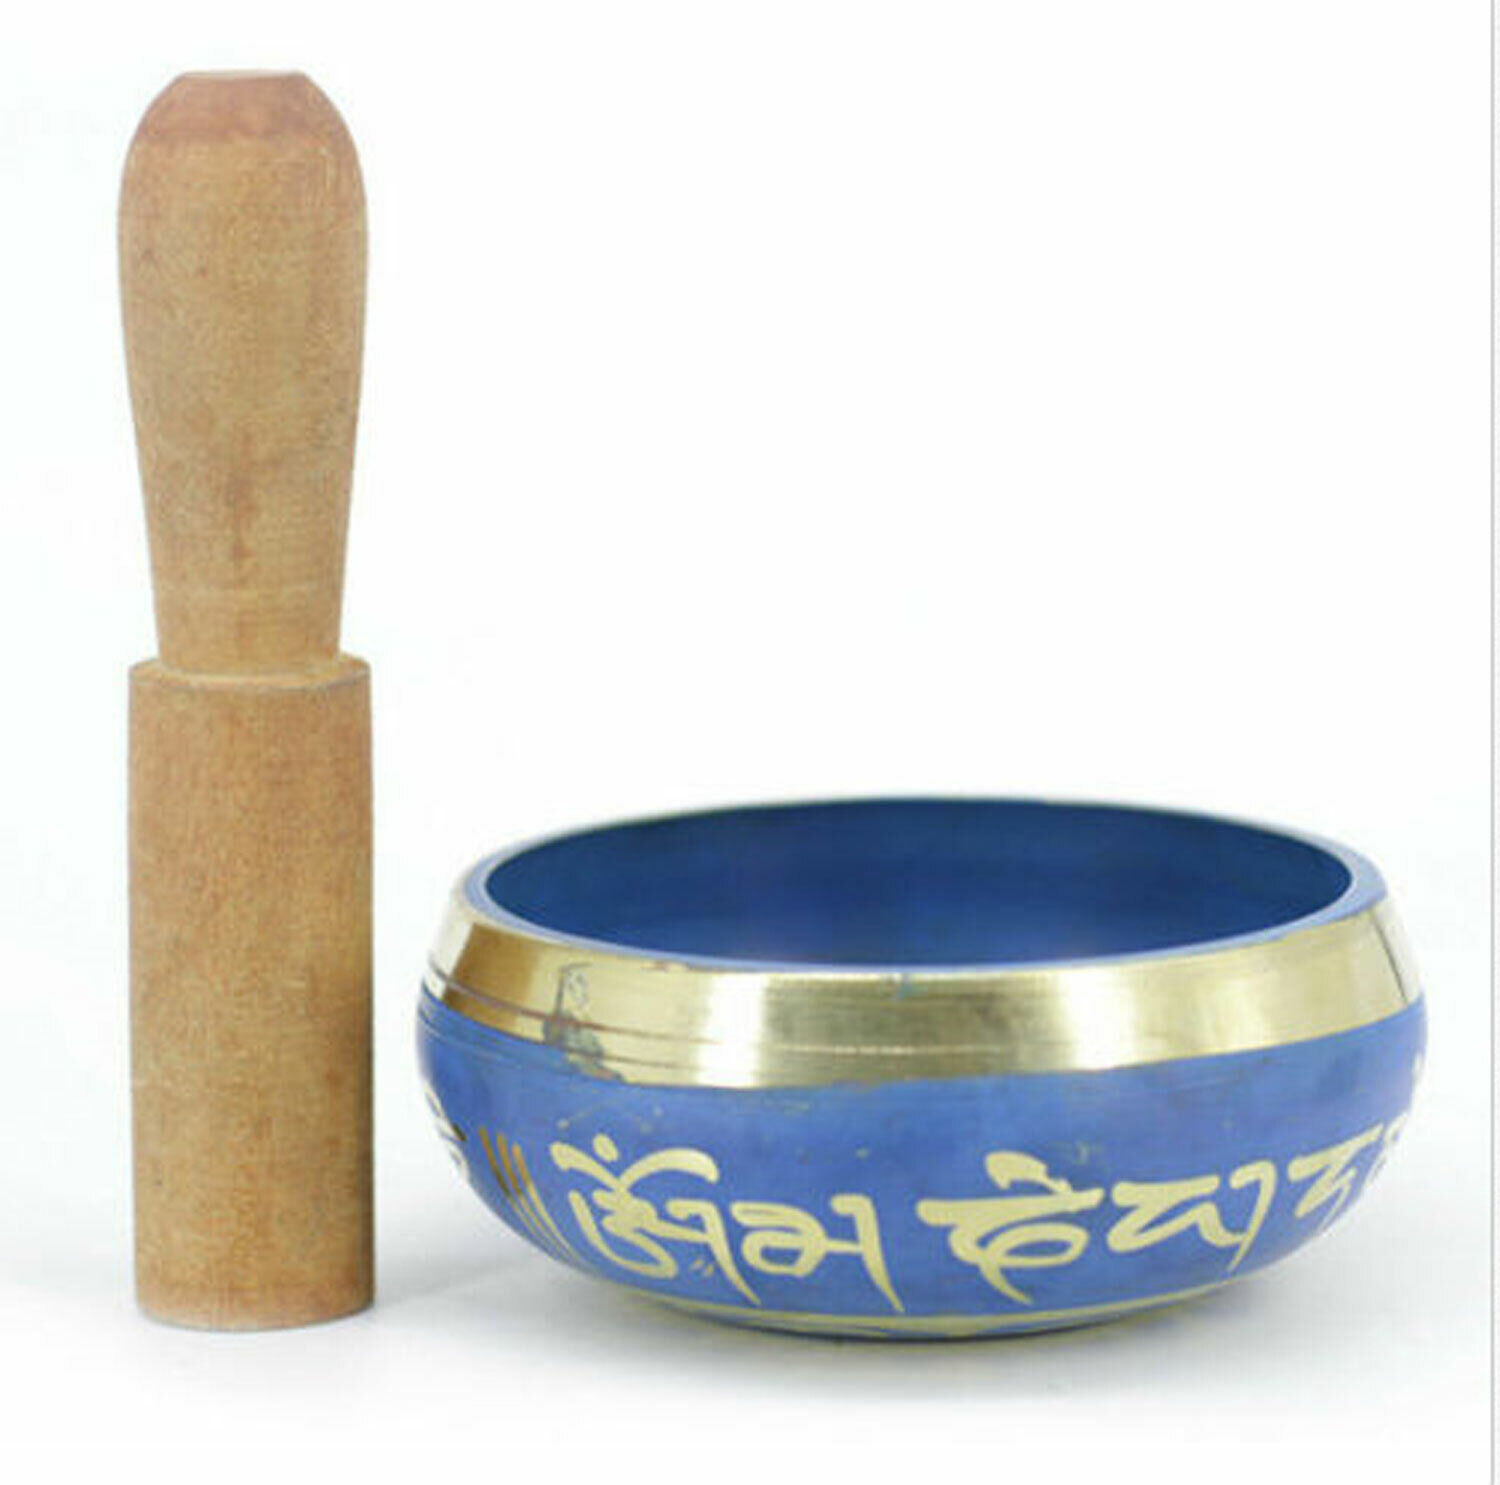 9.5cm Healing Music Singing Bowl Tibetan Buddhist Yoga Meditation Copper